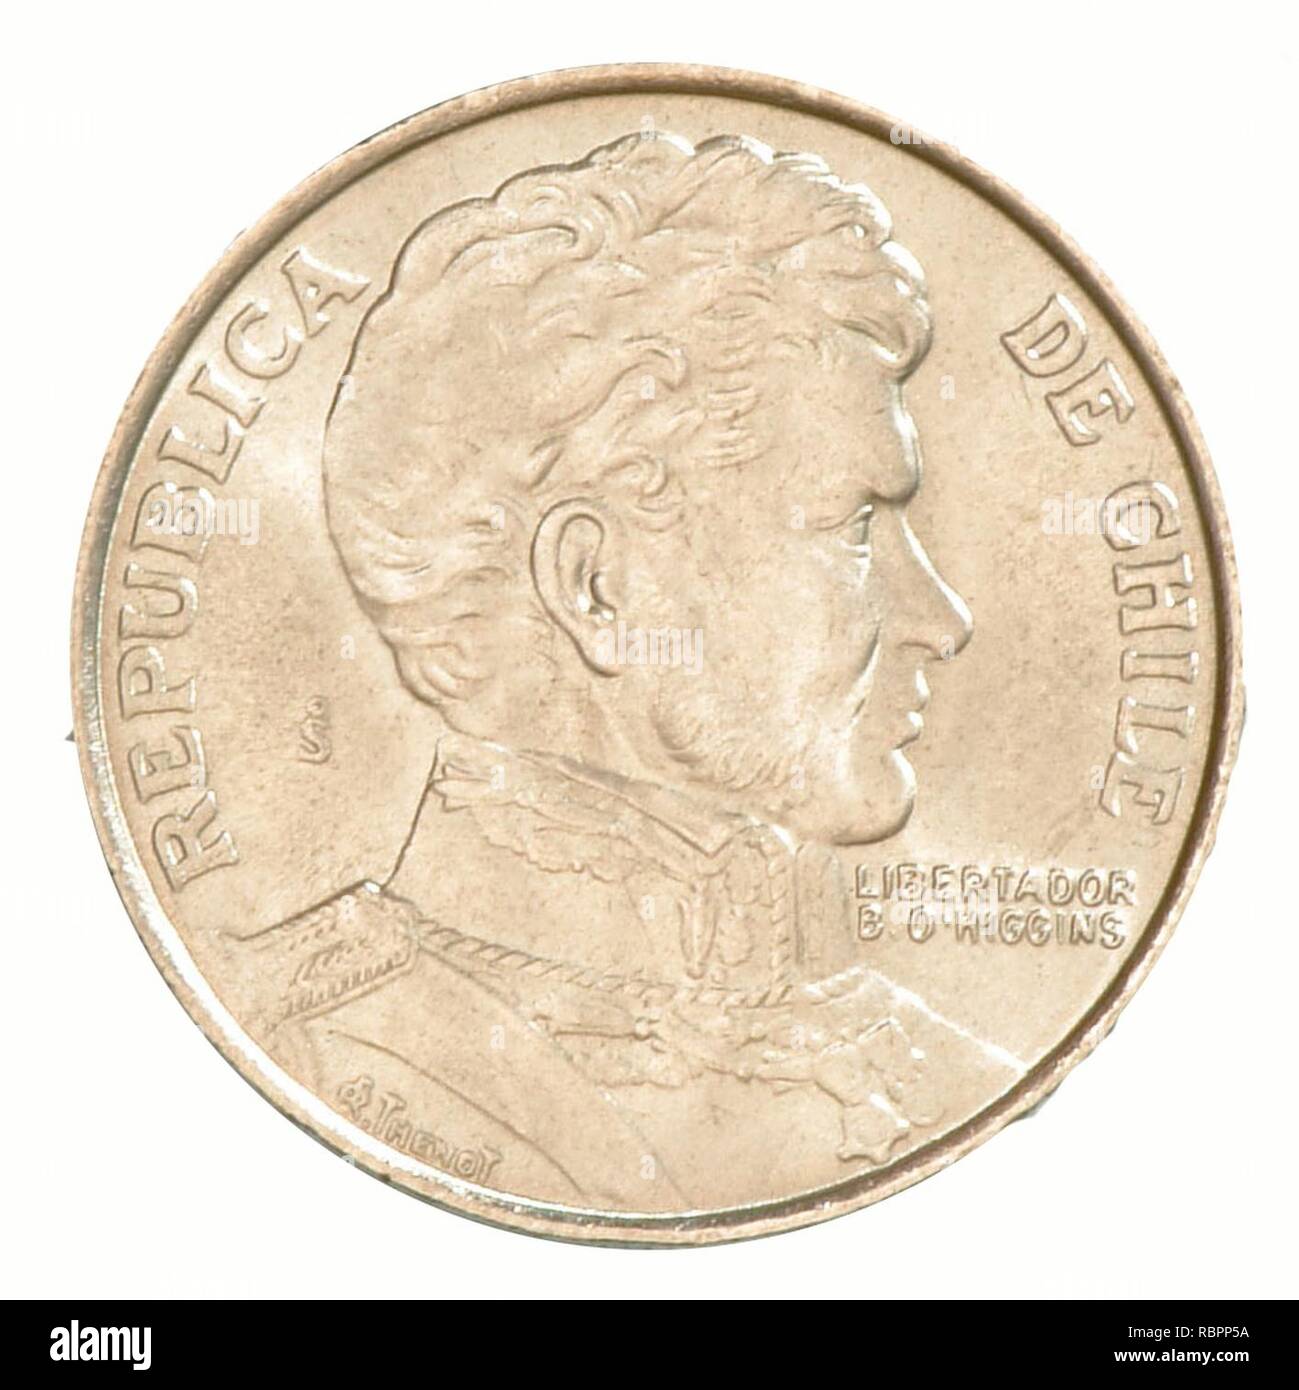 1 peso chileno 1976-A (31366241784). Stock Photo